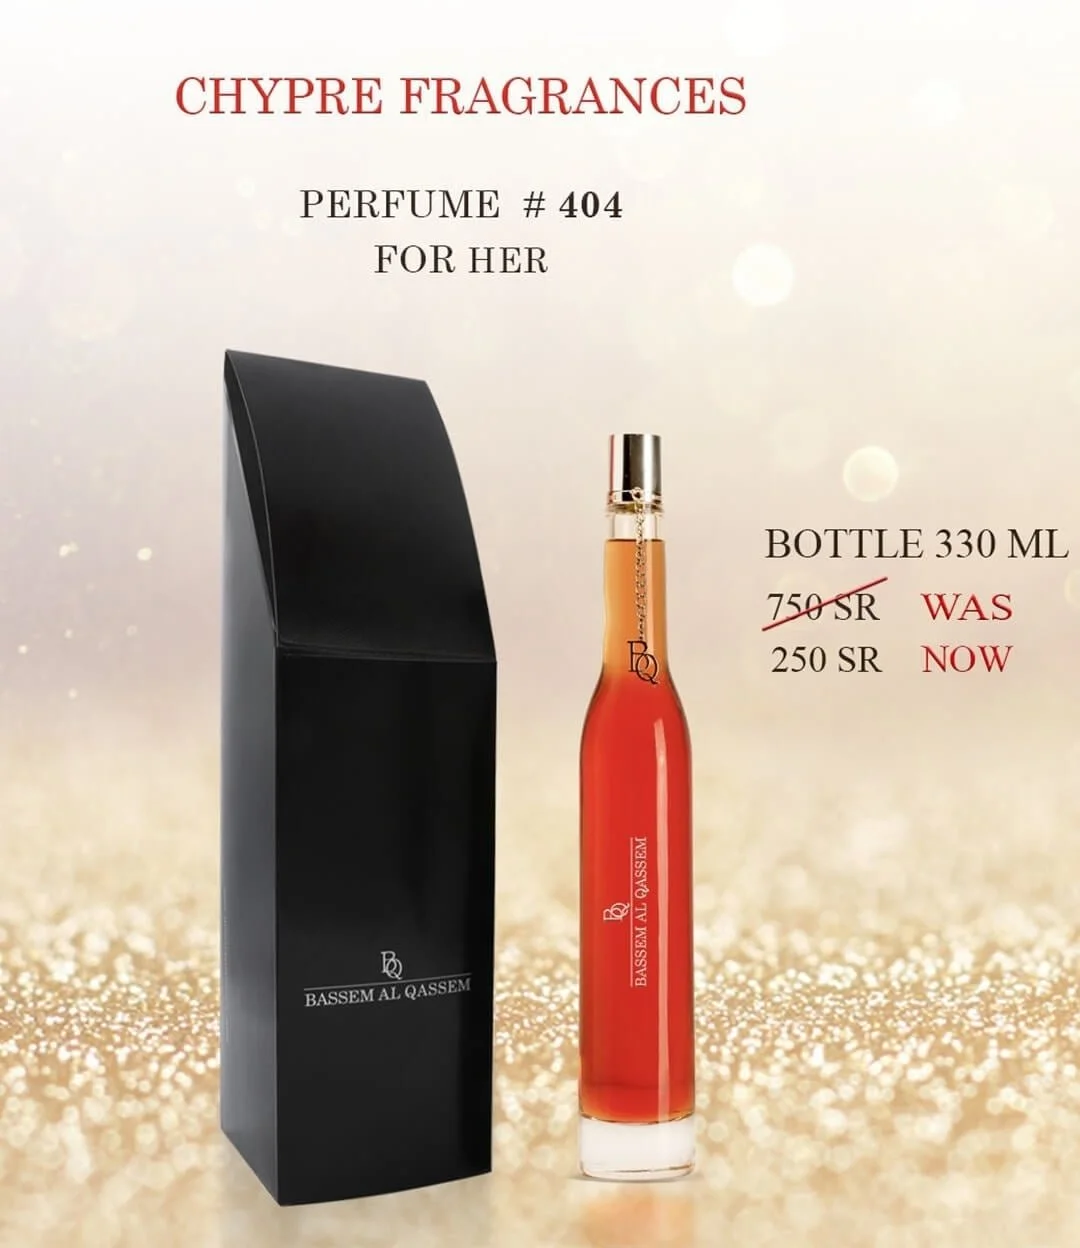 Perfume #404 Chypre Fragrance for Her by Bassem Al Qassem 